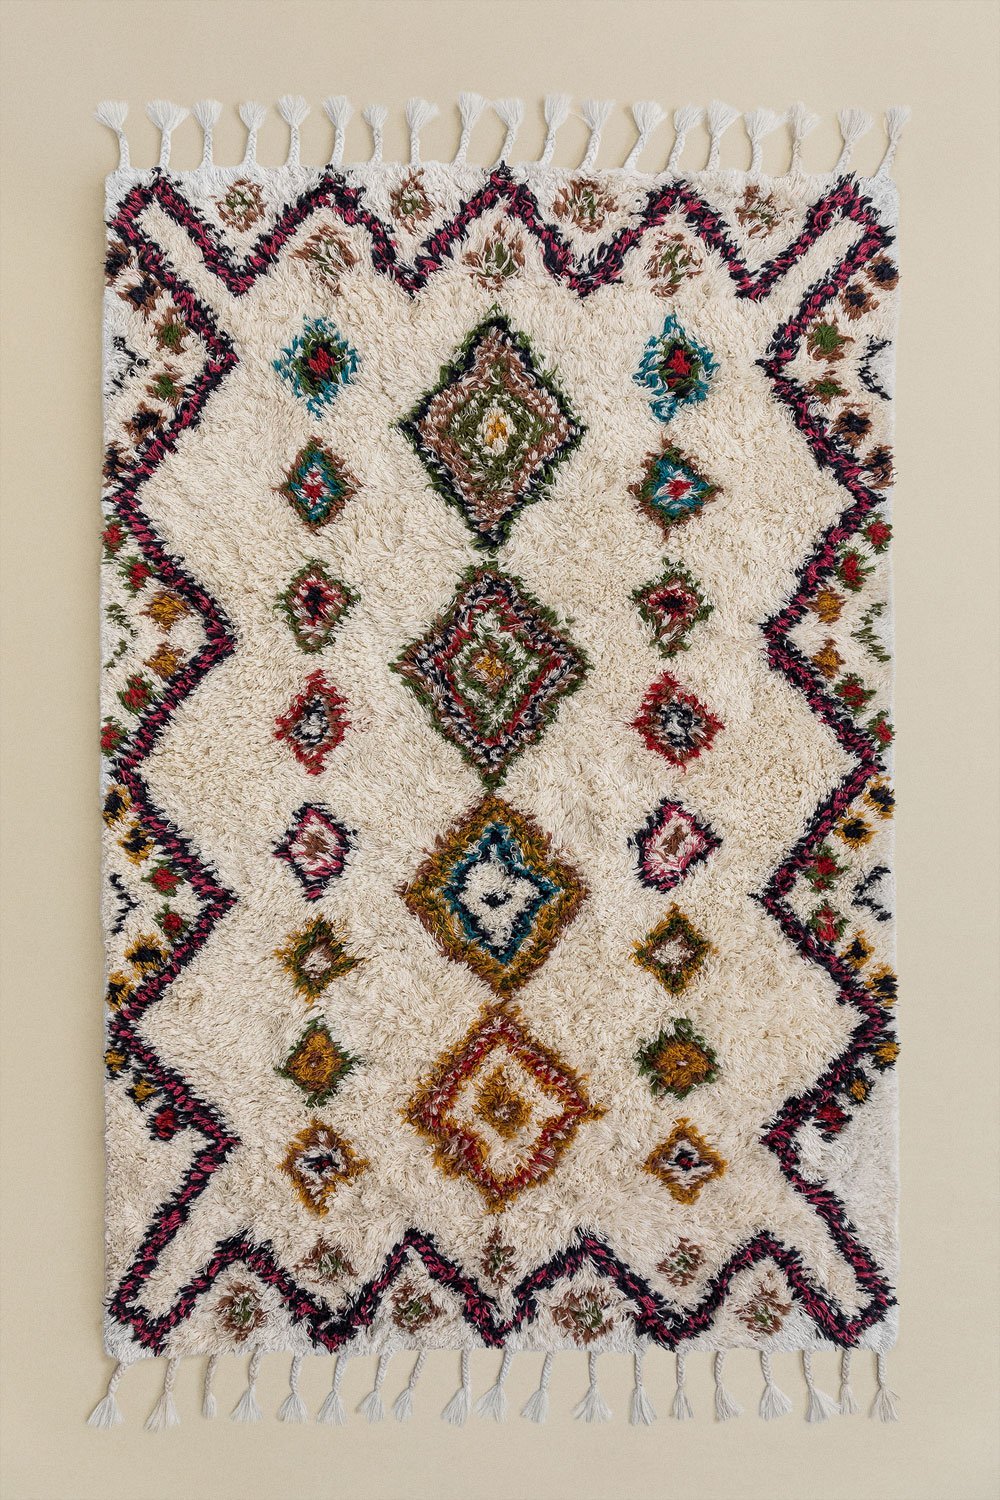 Vloerkleed van wol en katoen (280x165 cm) Mesty, galerij beeld 1